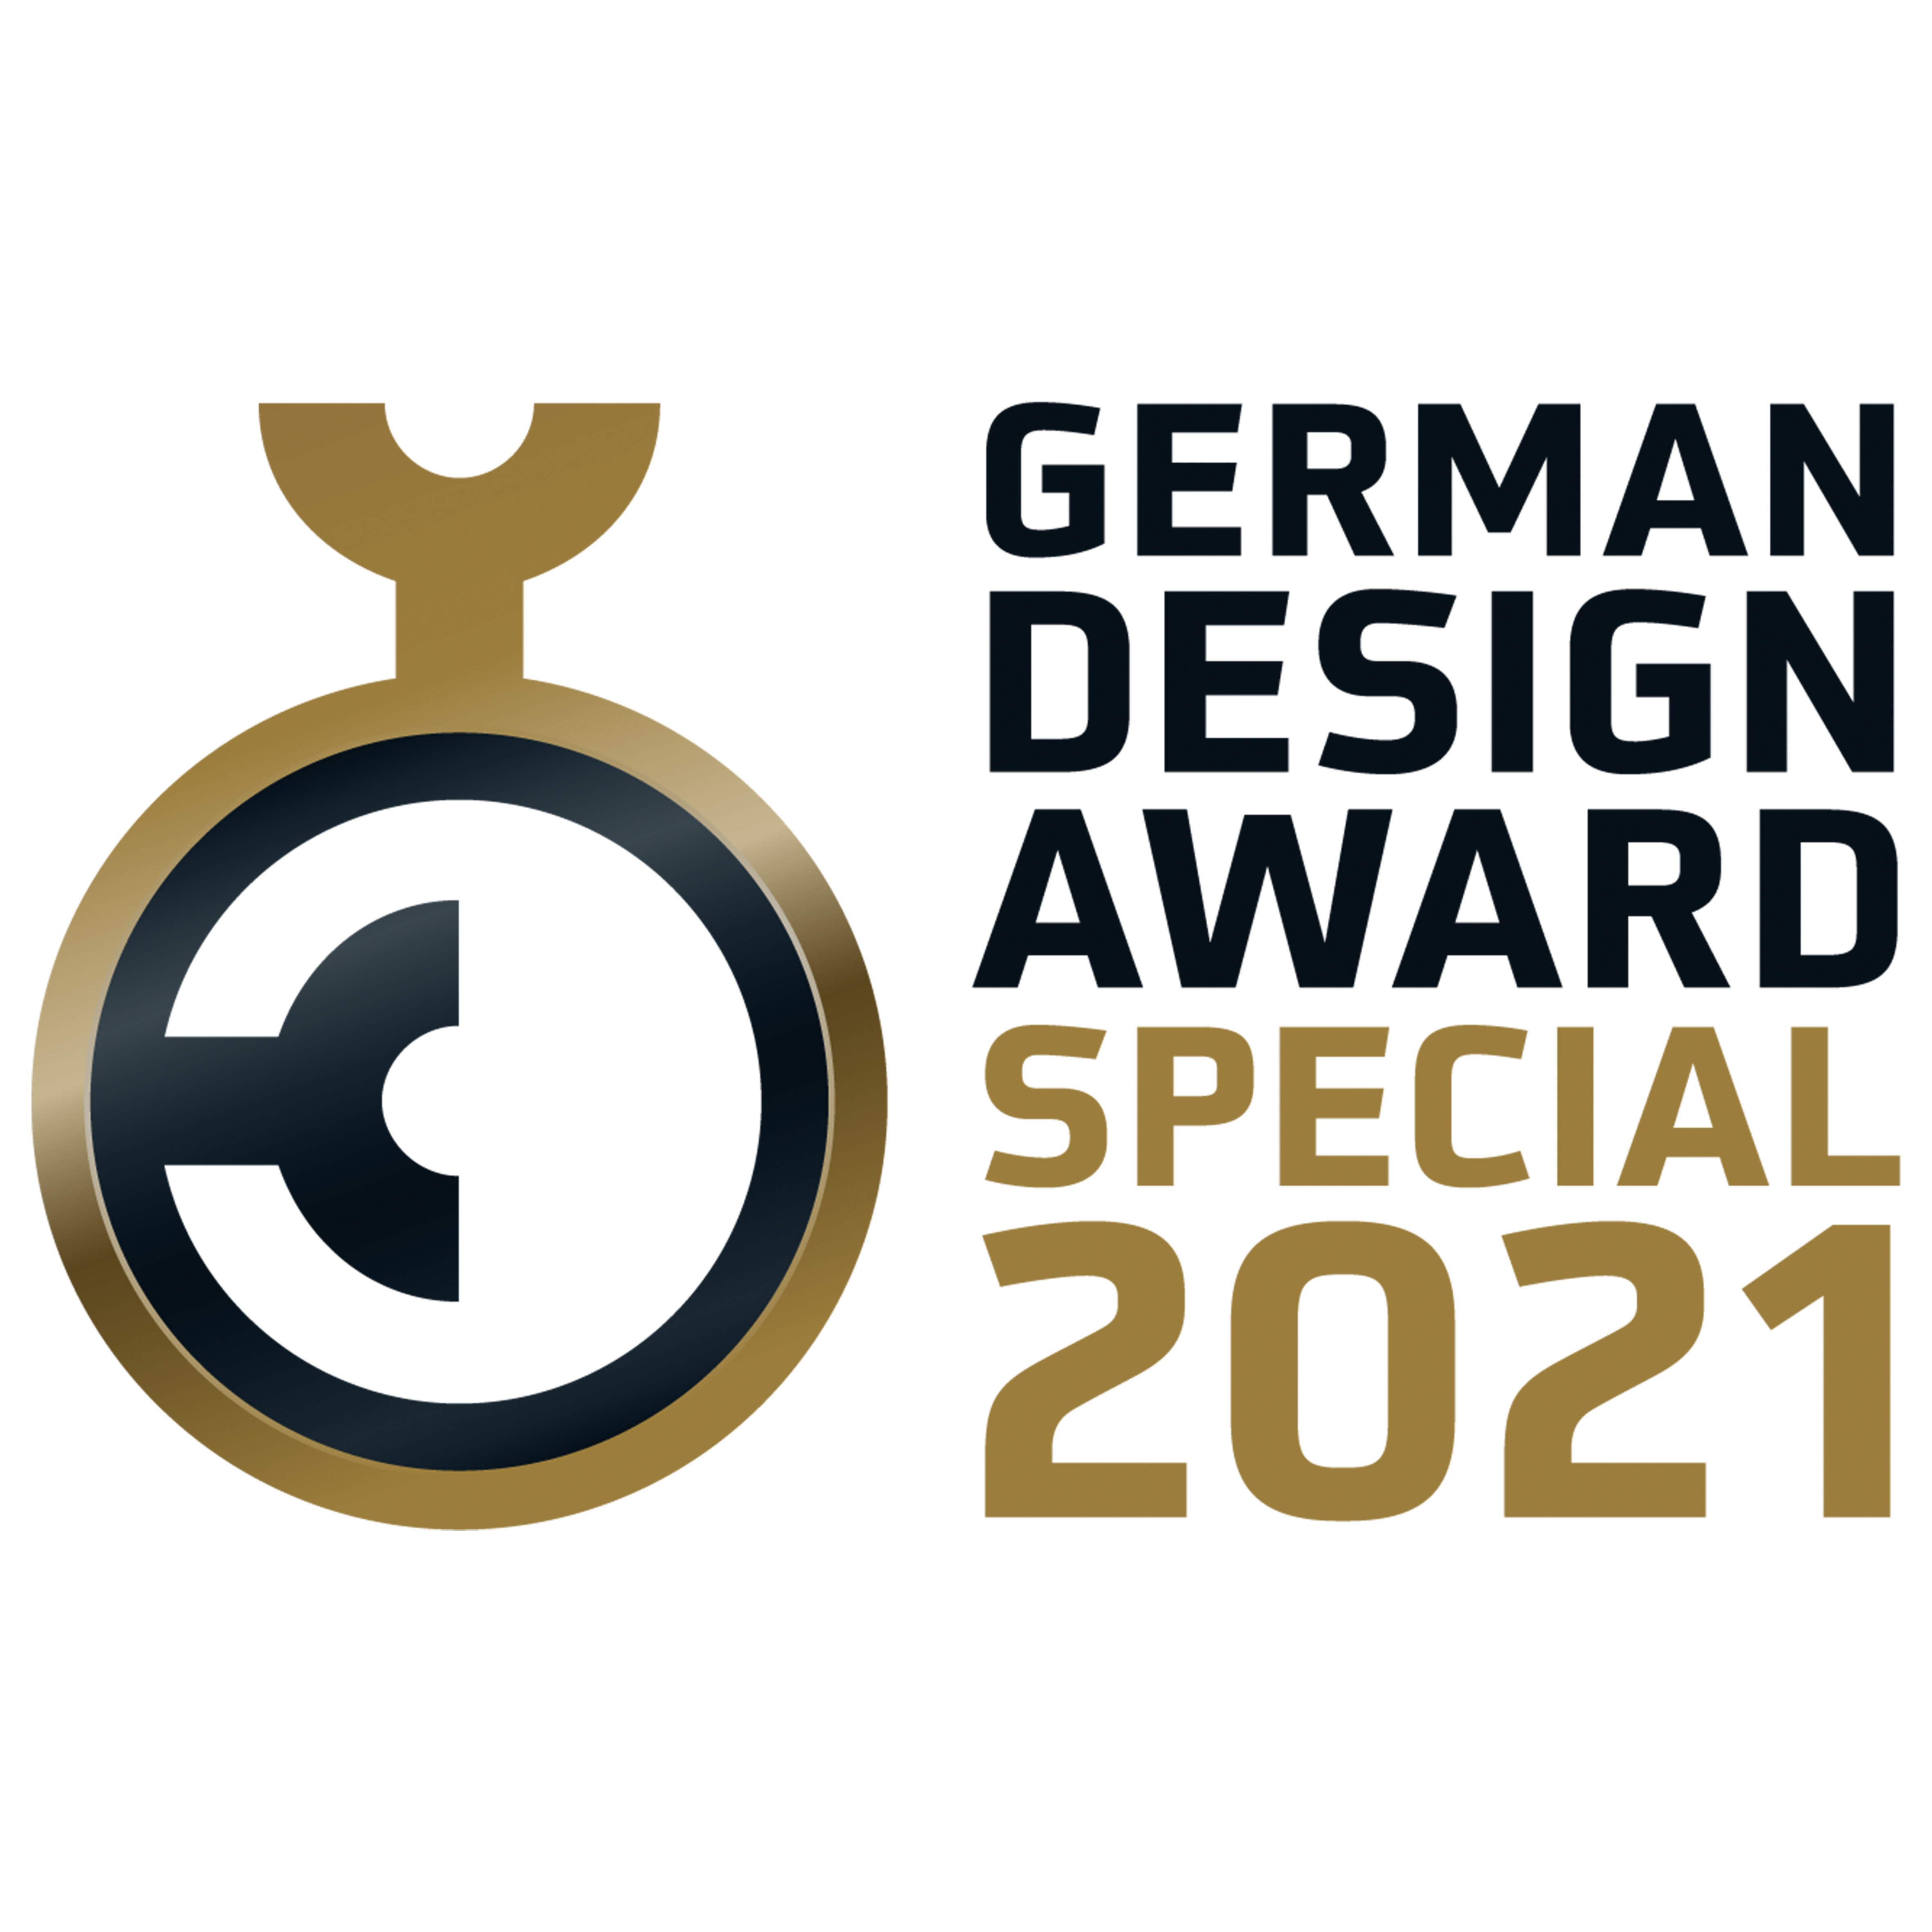 German Design Award Special 2021